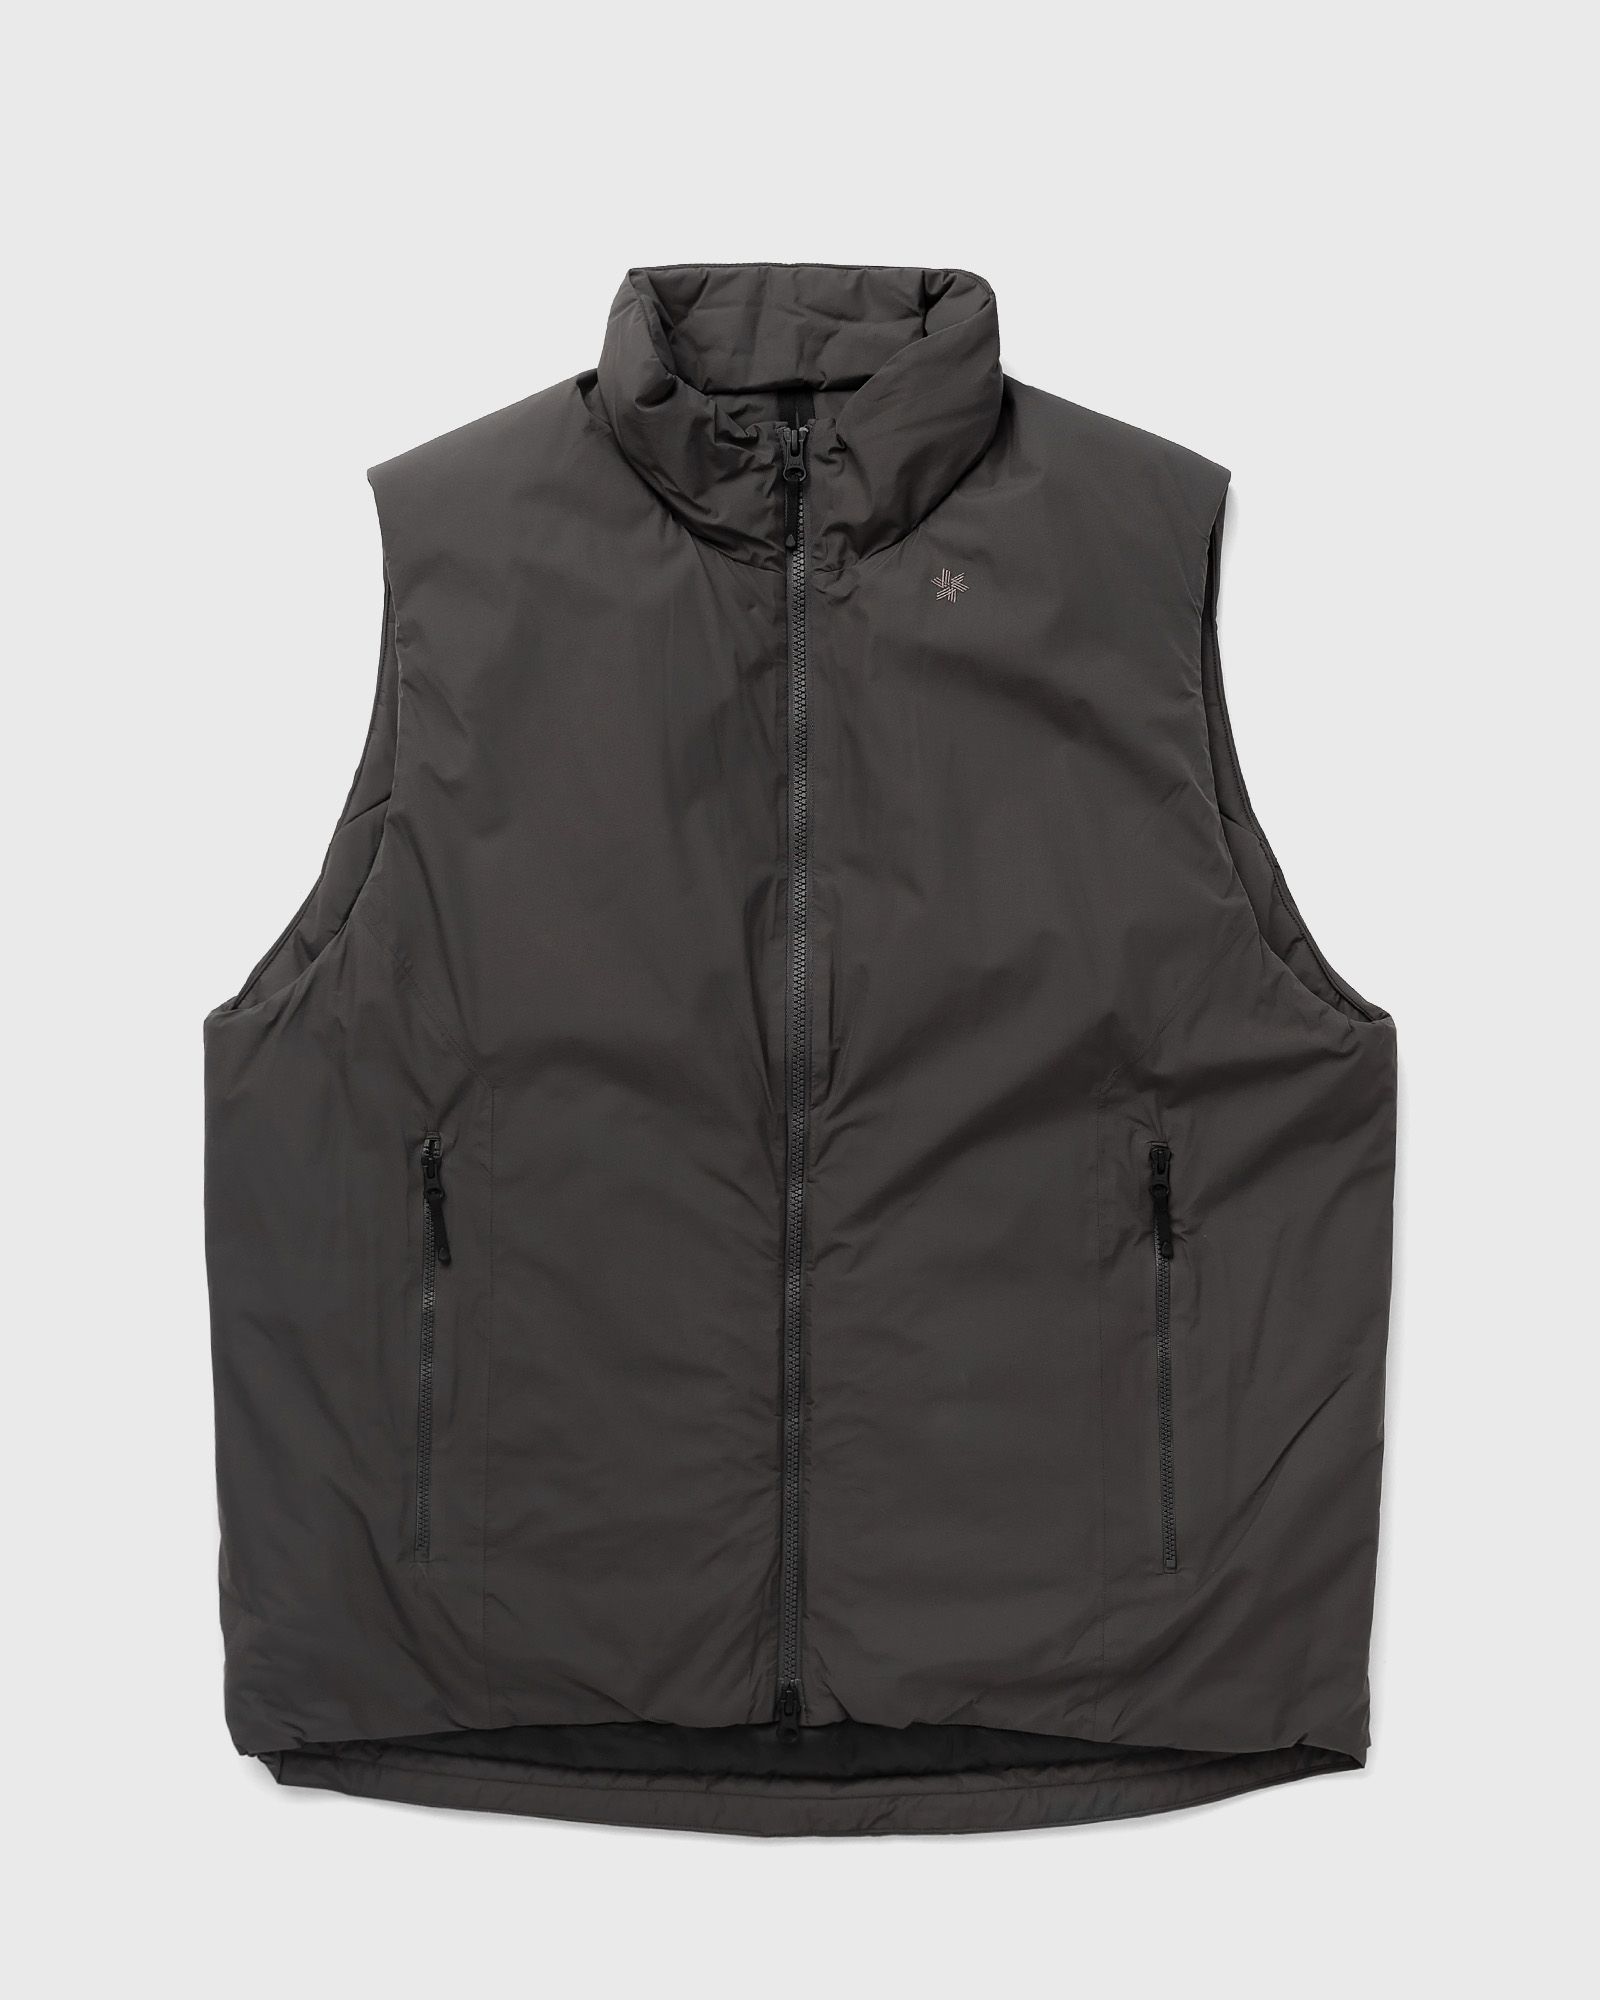 Goldwin - gore-tex windstopper puffy mil vest men vests green in größe:m